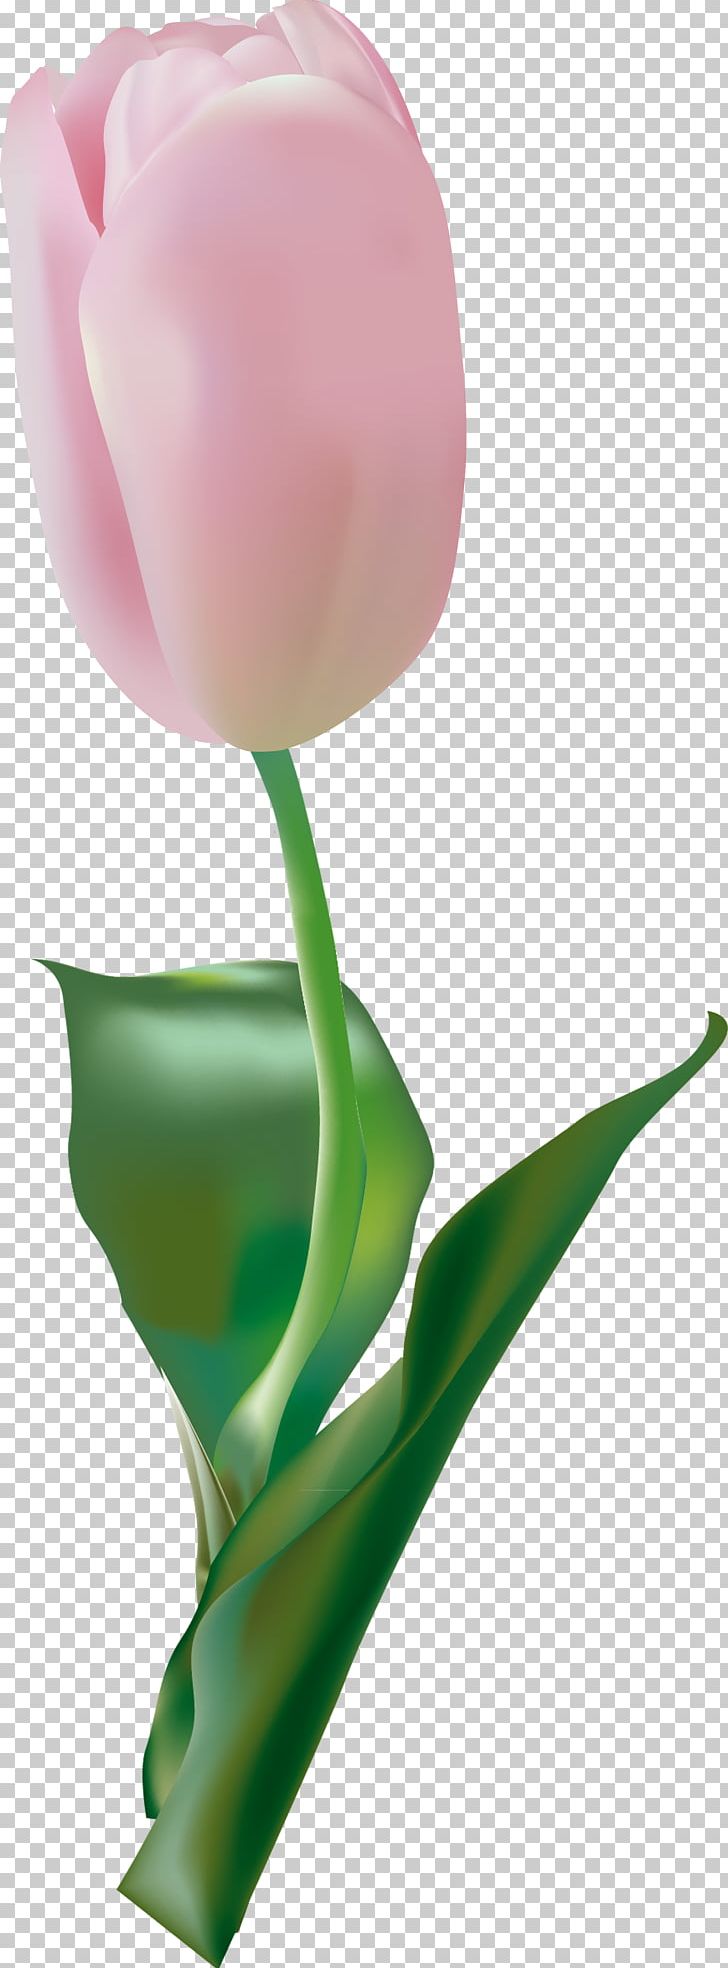 Cut Flowers Tulip PNG, Clipart, Cut Flowers, Desktop Wallpaper, Easter, Floral Design, Flower Free PNG Download